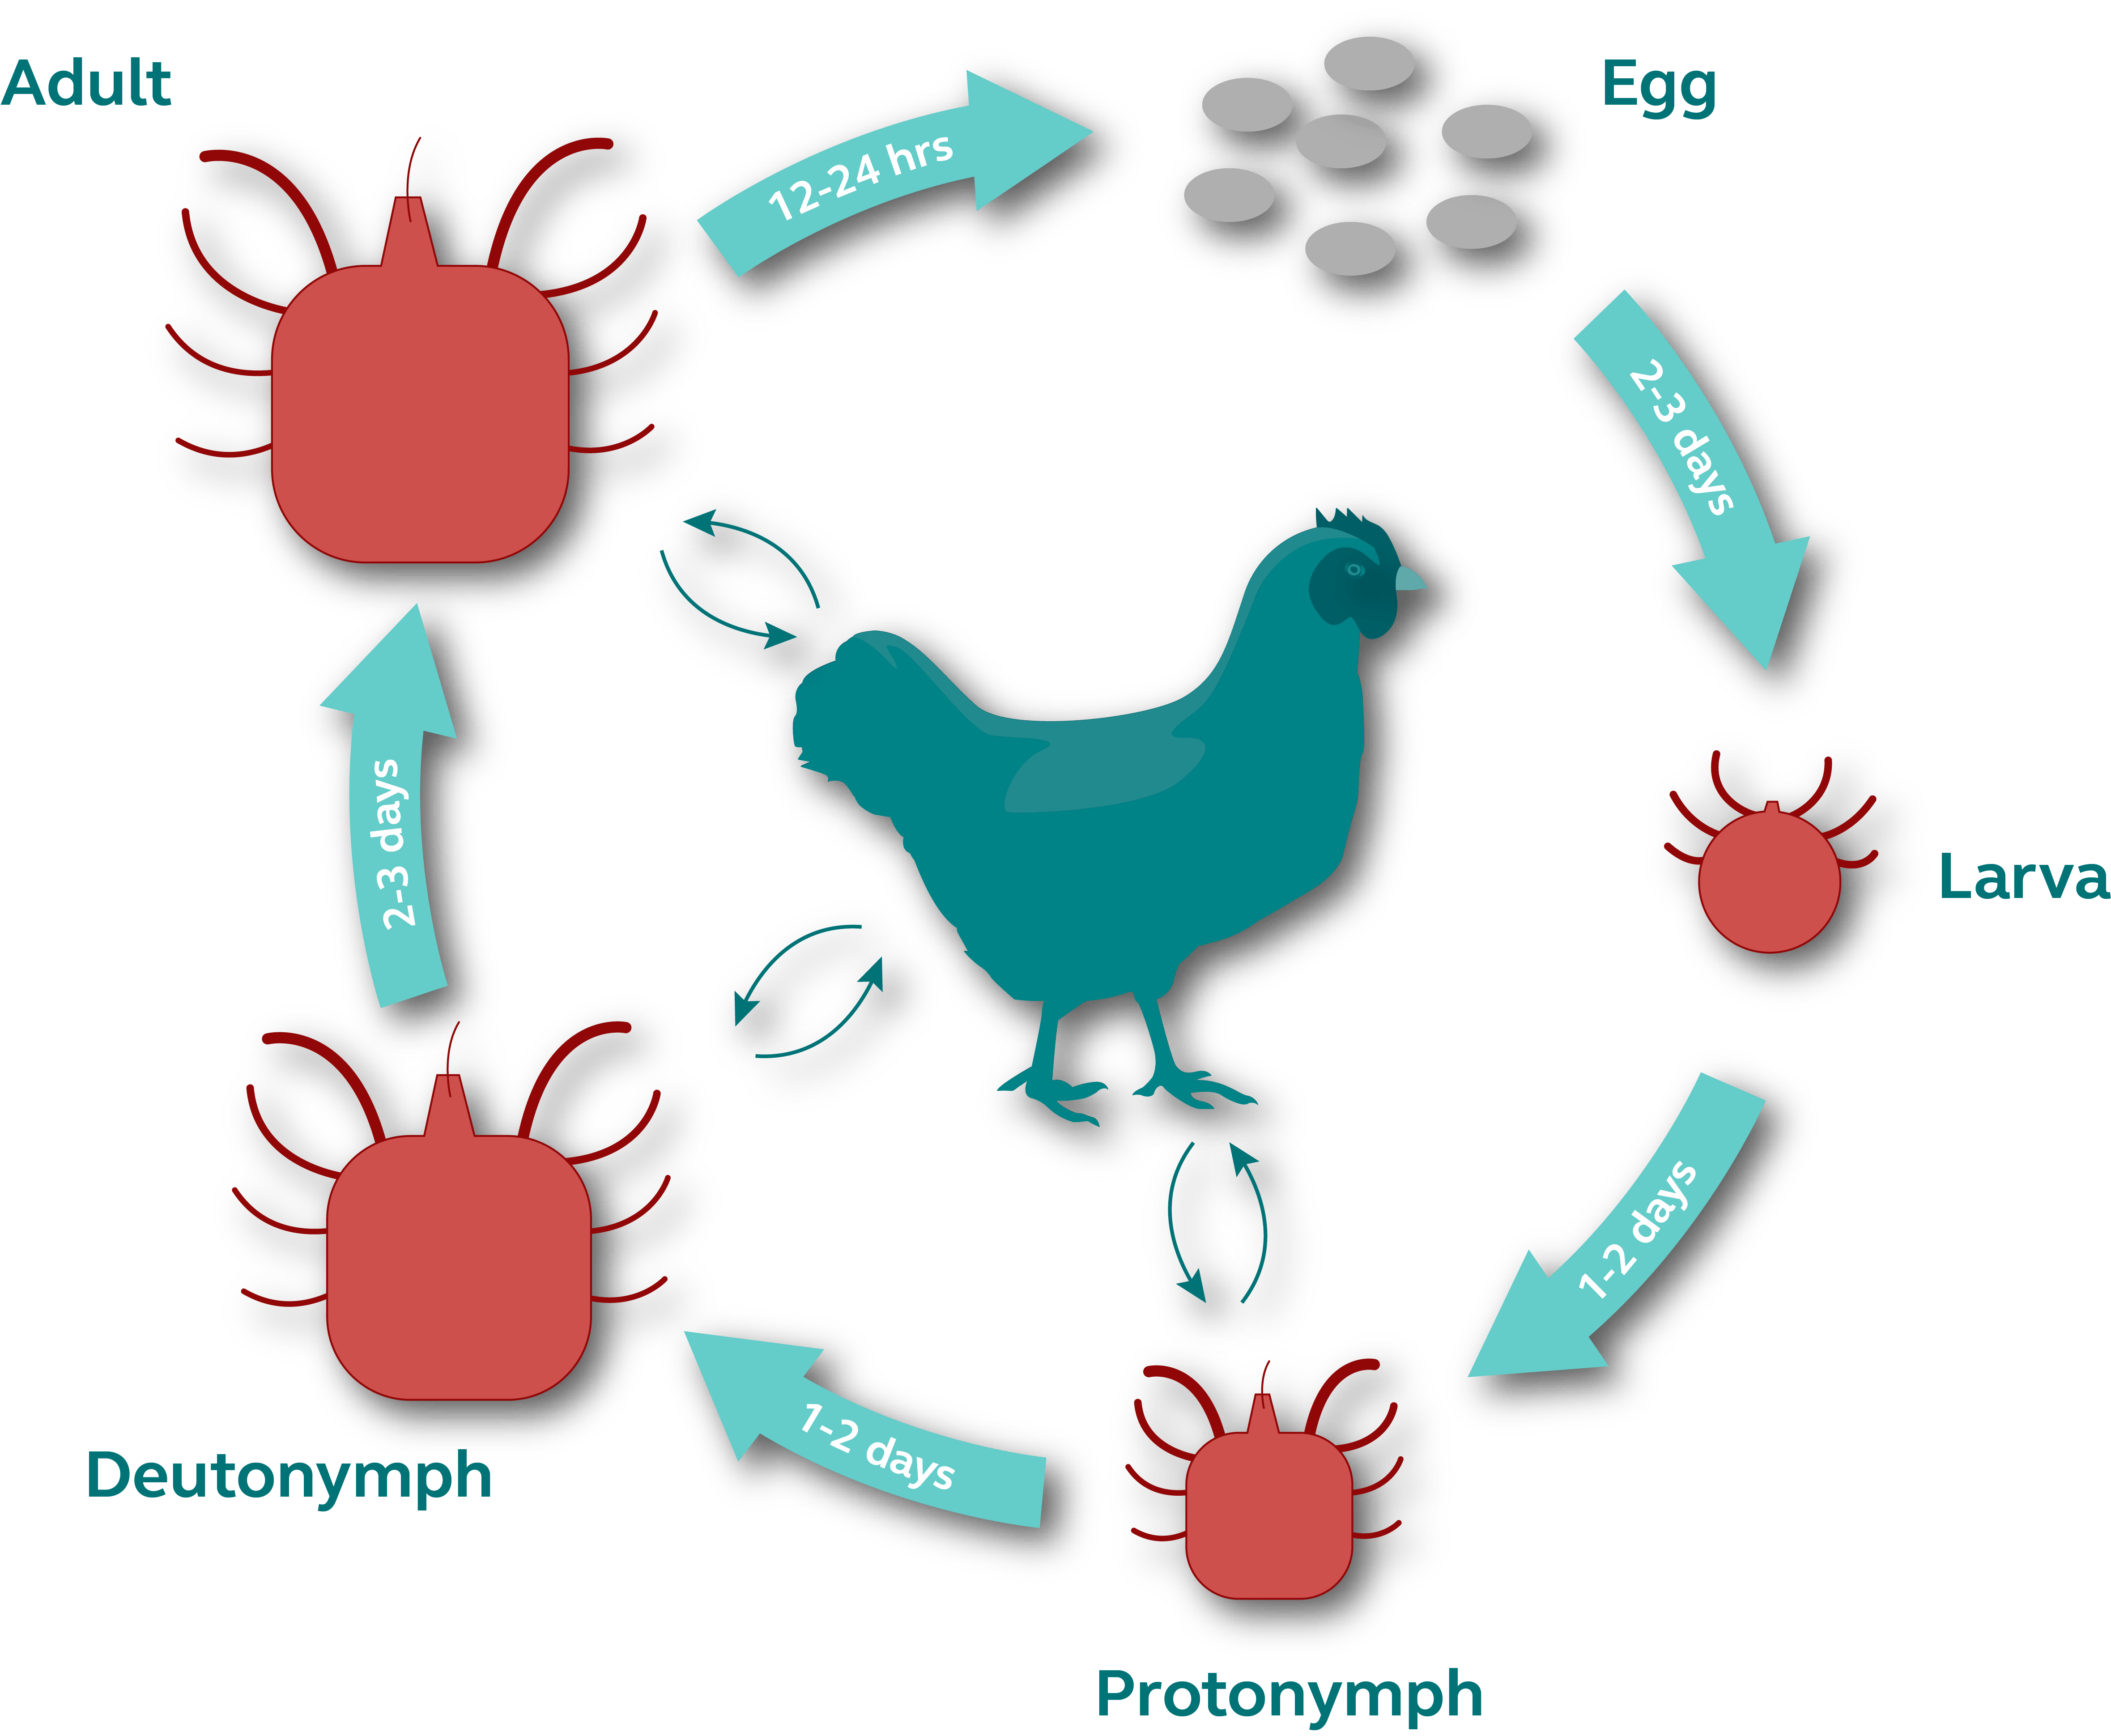 bird mites life cycle